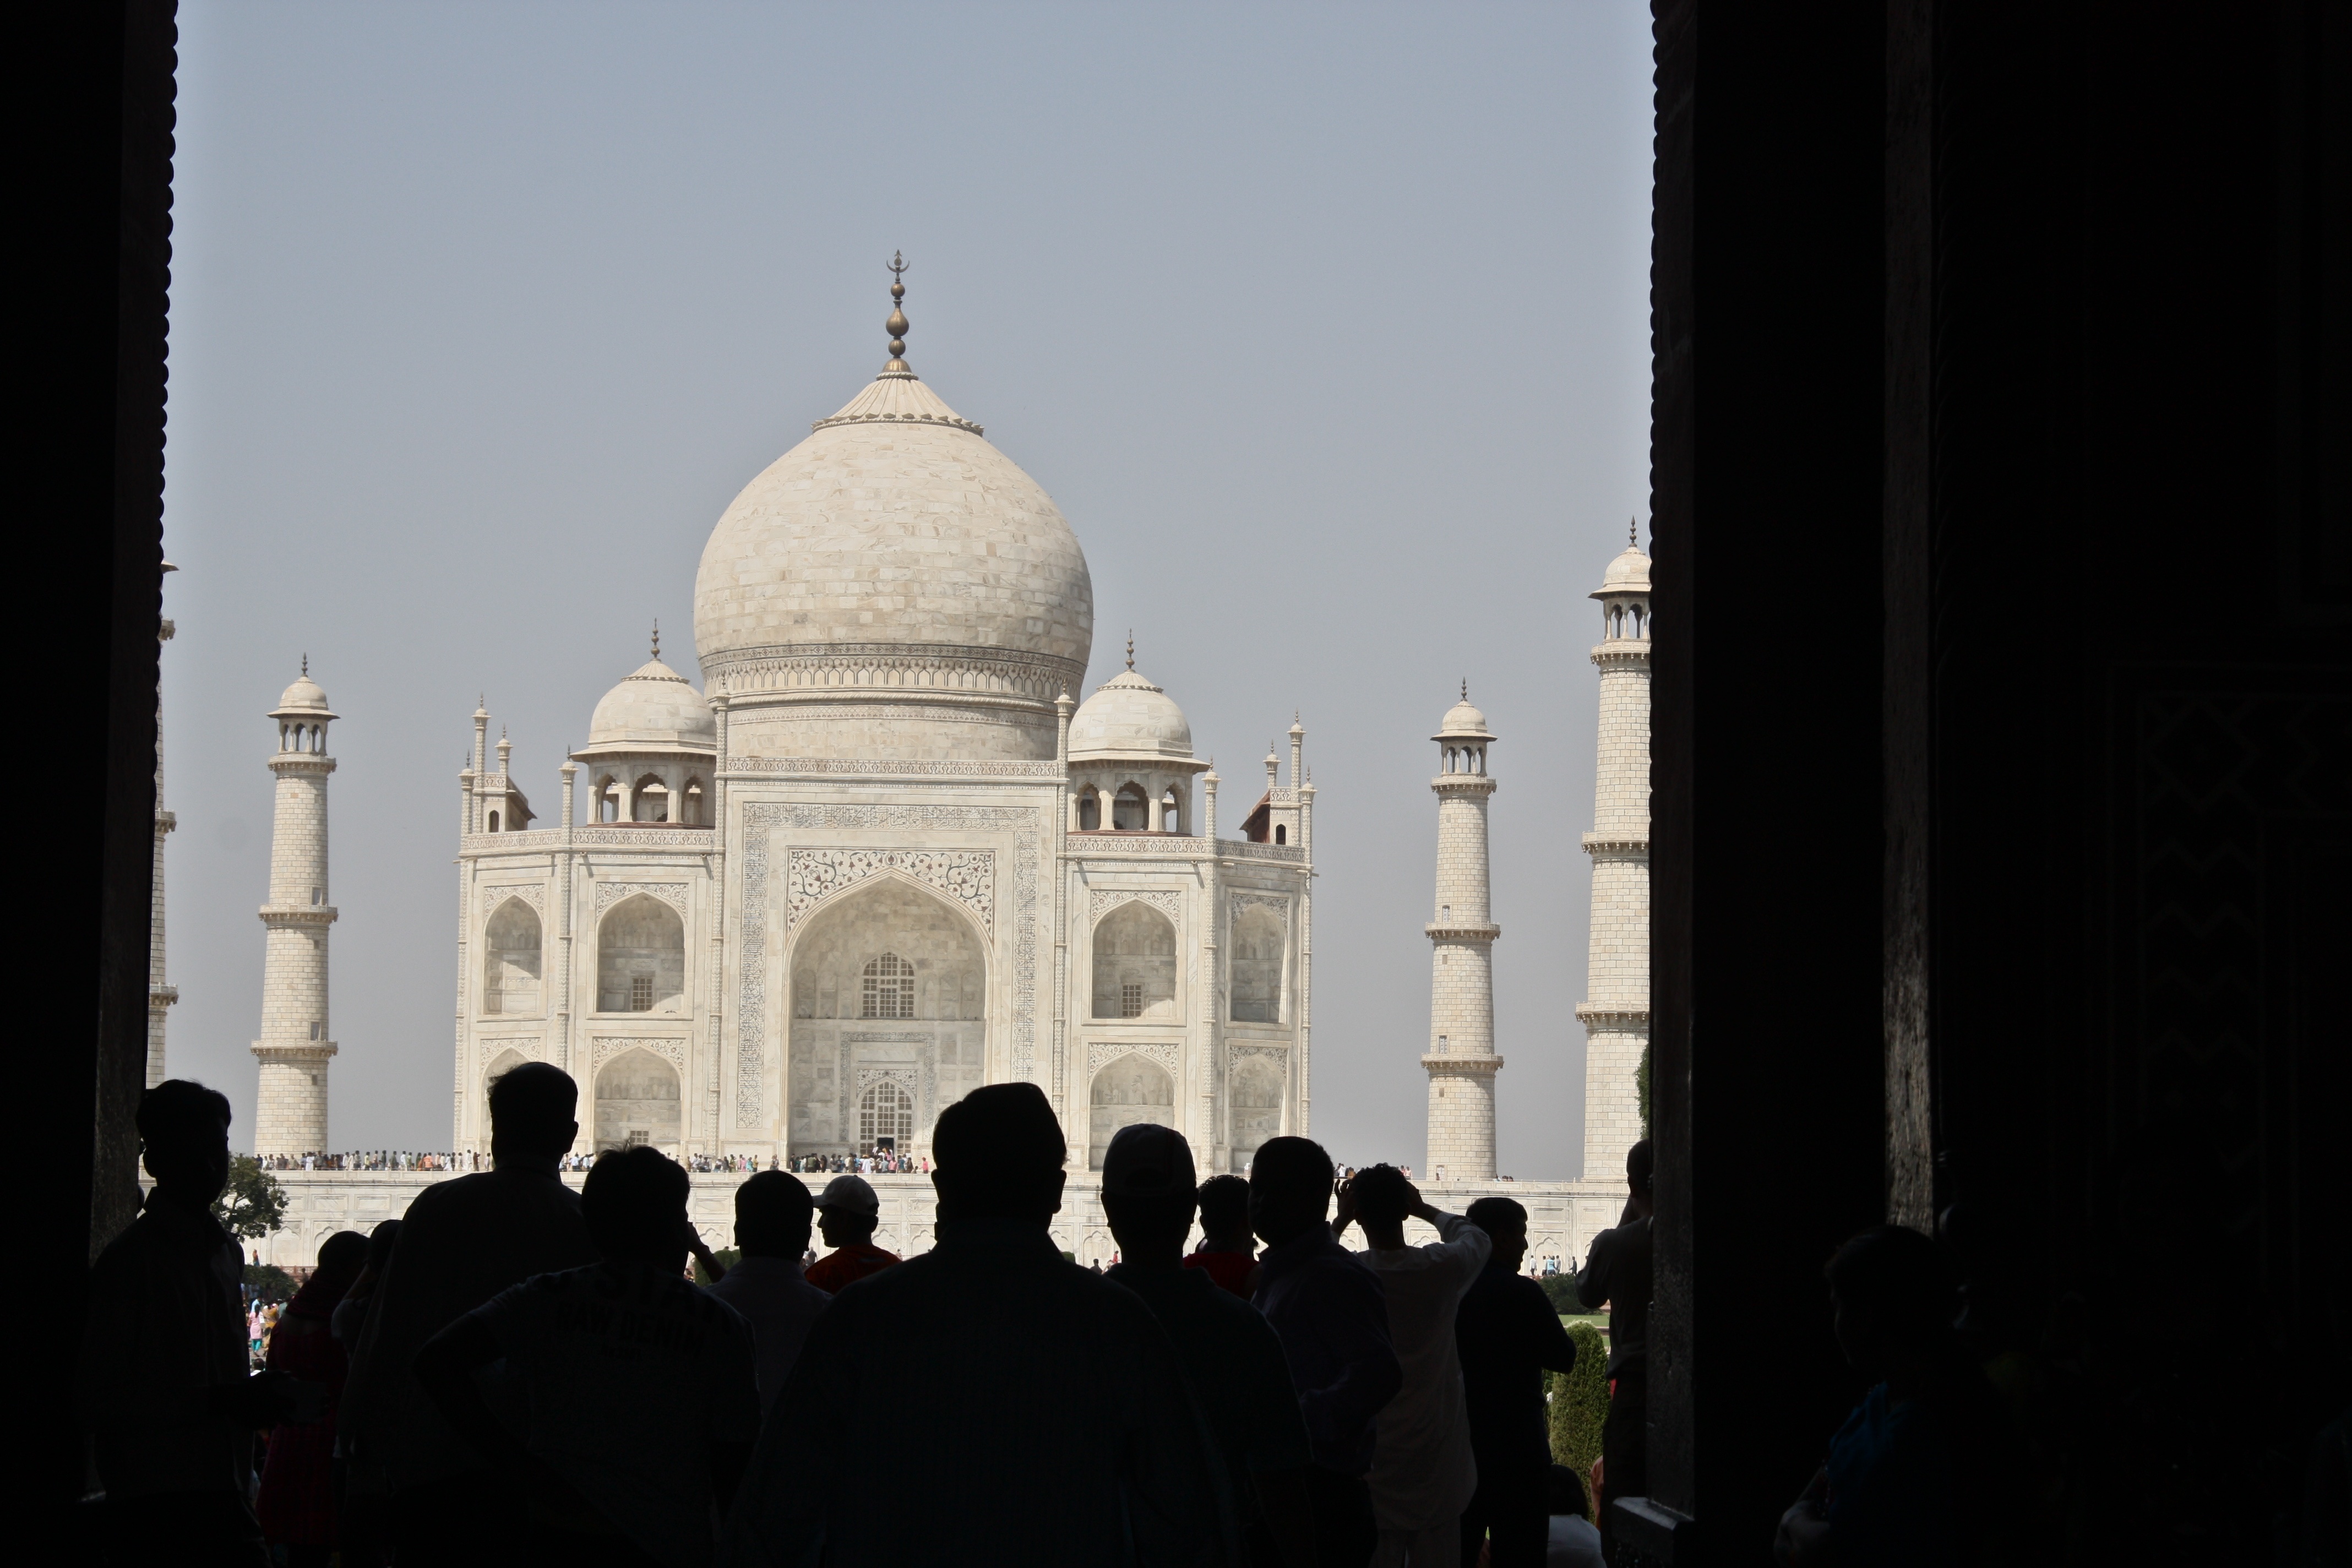 Approaching the Taj Mahal